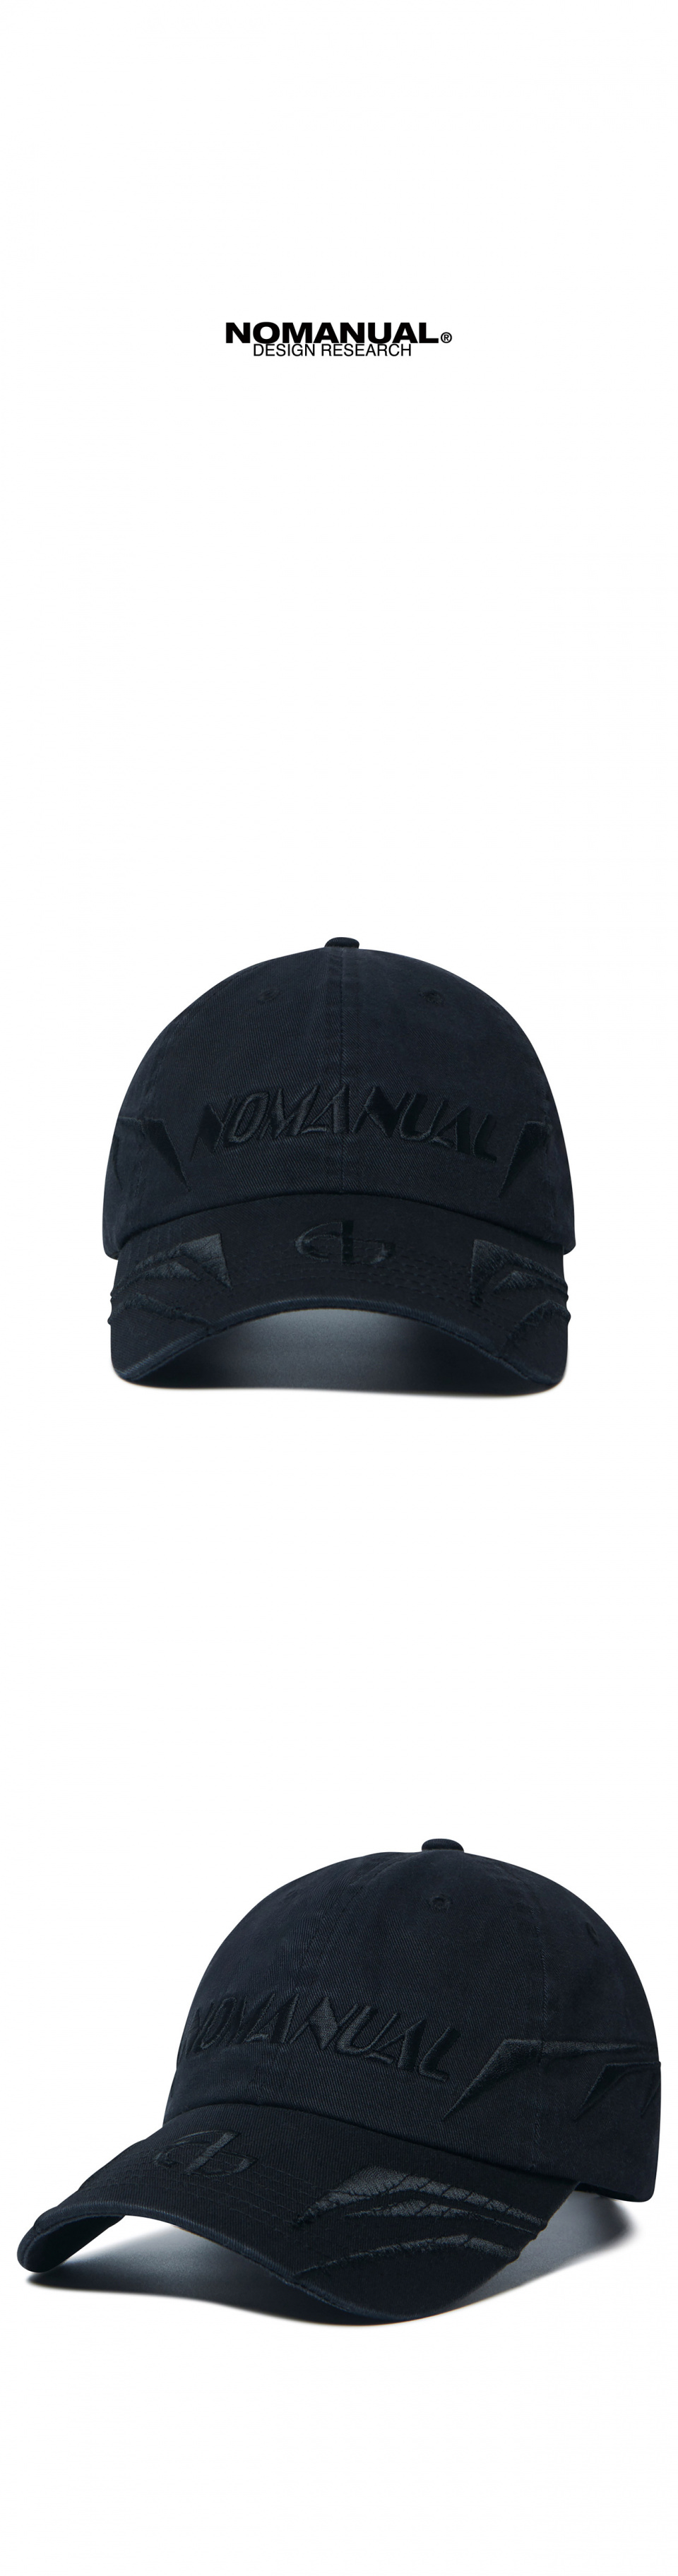 NOMANUAL(ノーマニュアル) D.C.L BALL CAP - WASHED BLACK